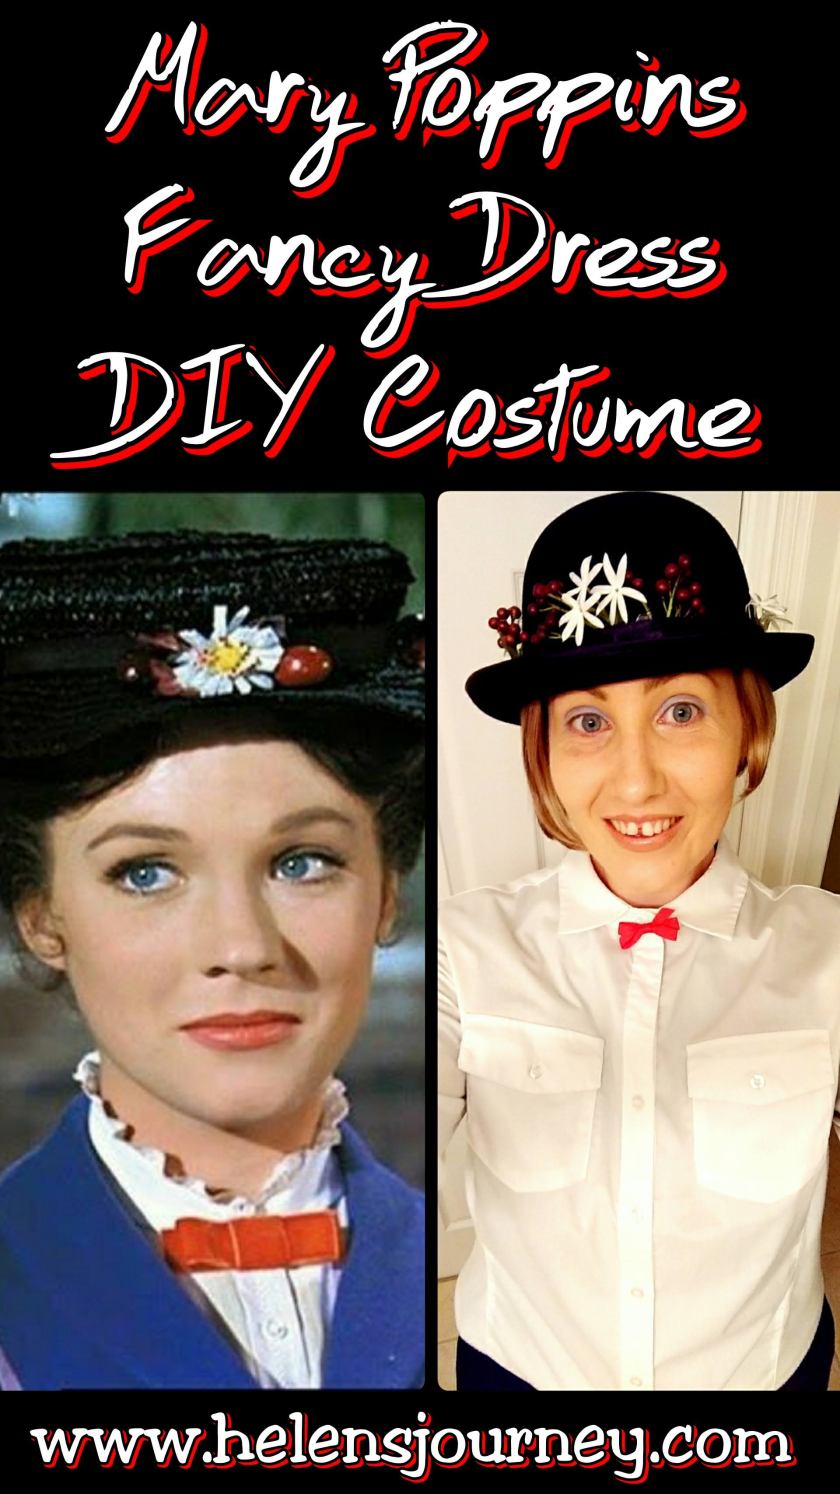 DIY Mary Poppins Hat for a Fancy Dress Costume by Helen's Journey Blog www.helensjourney.com